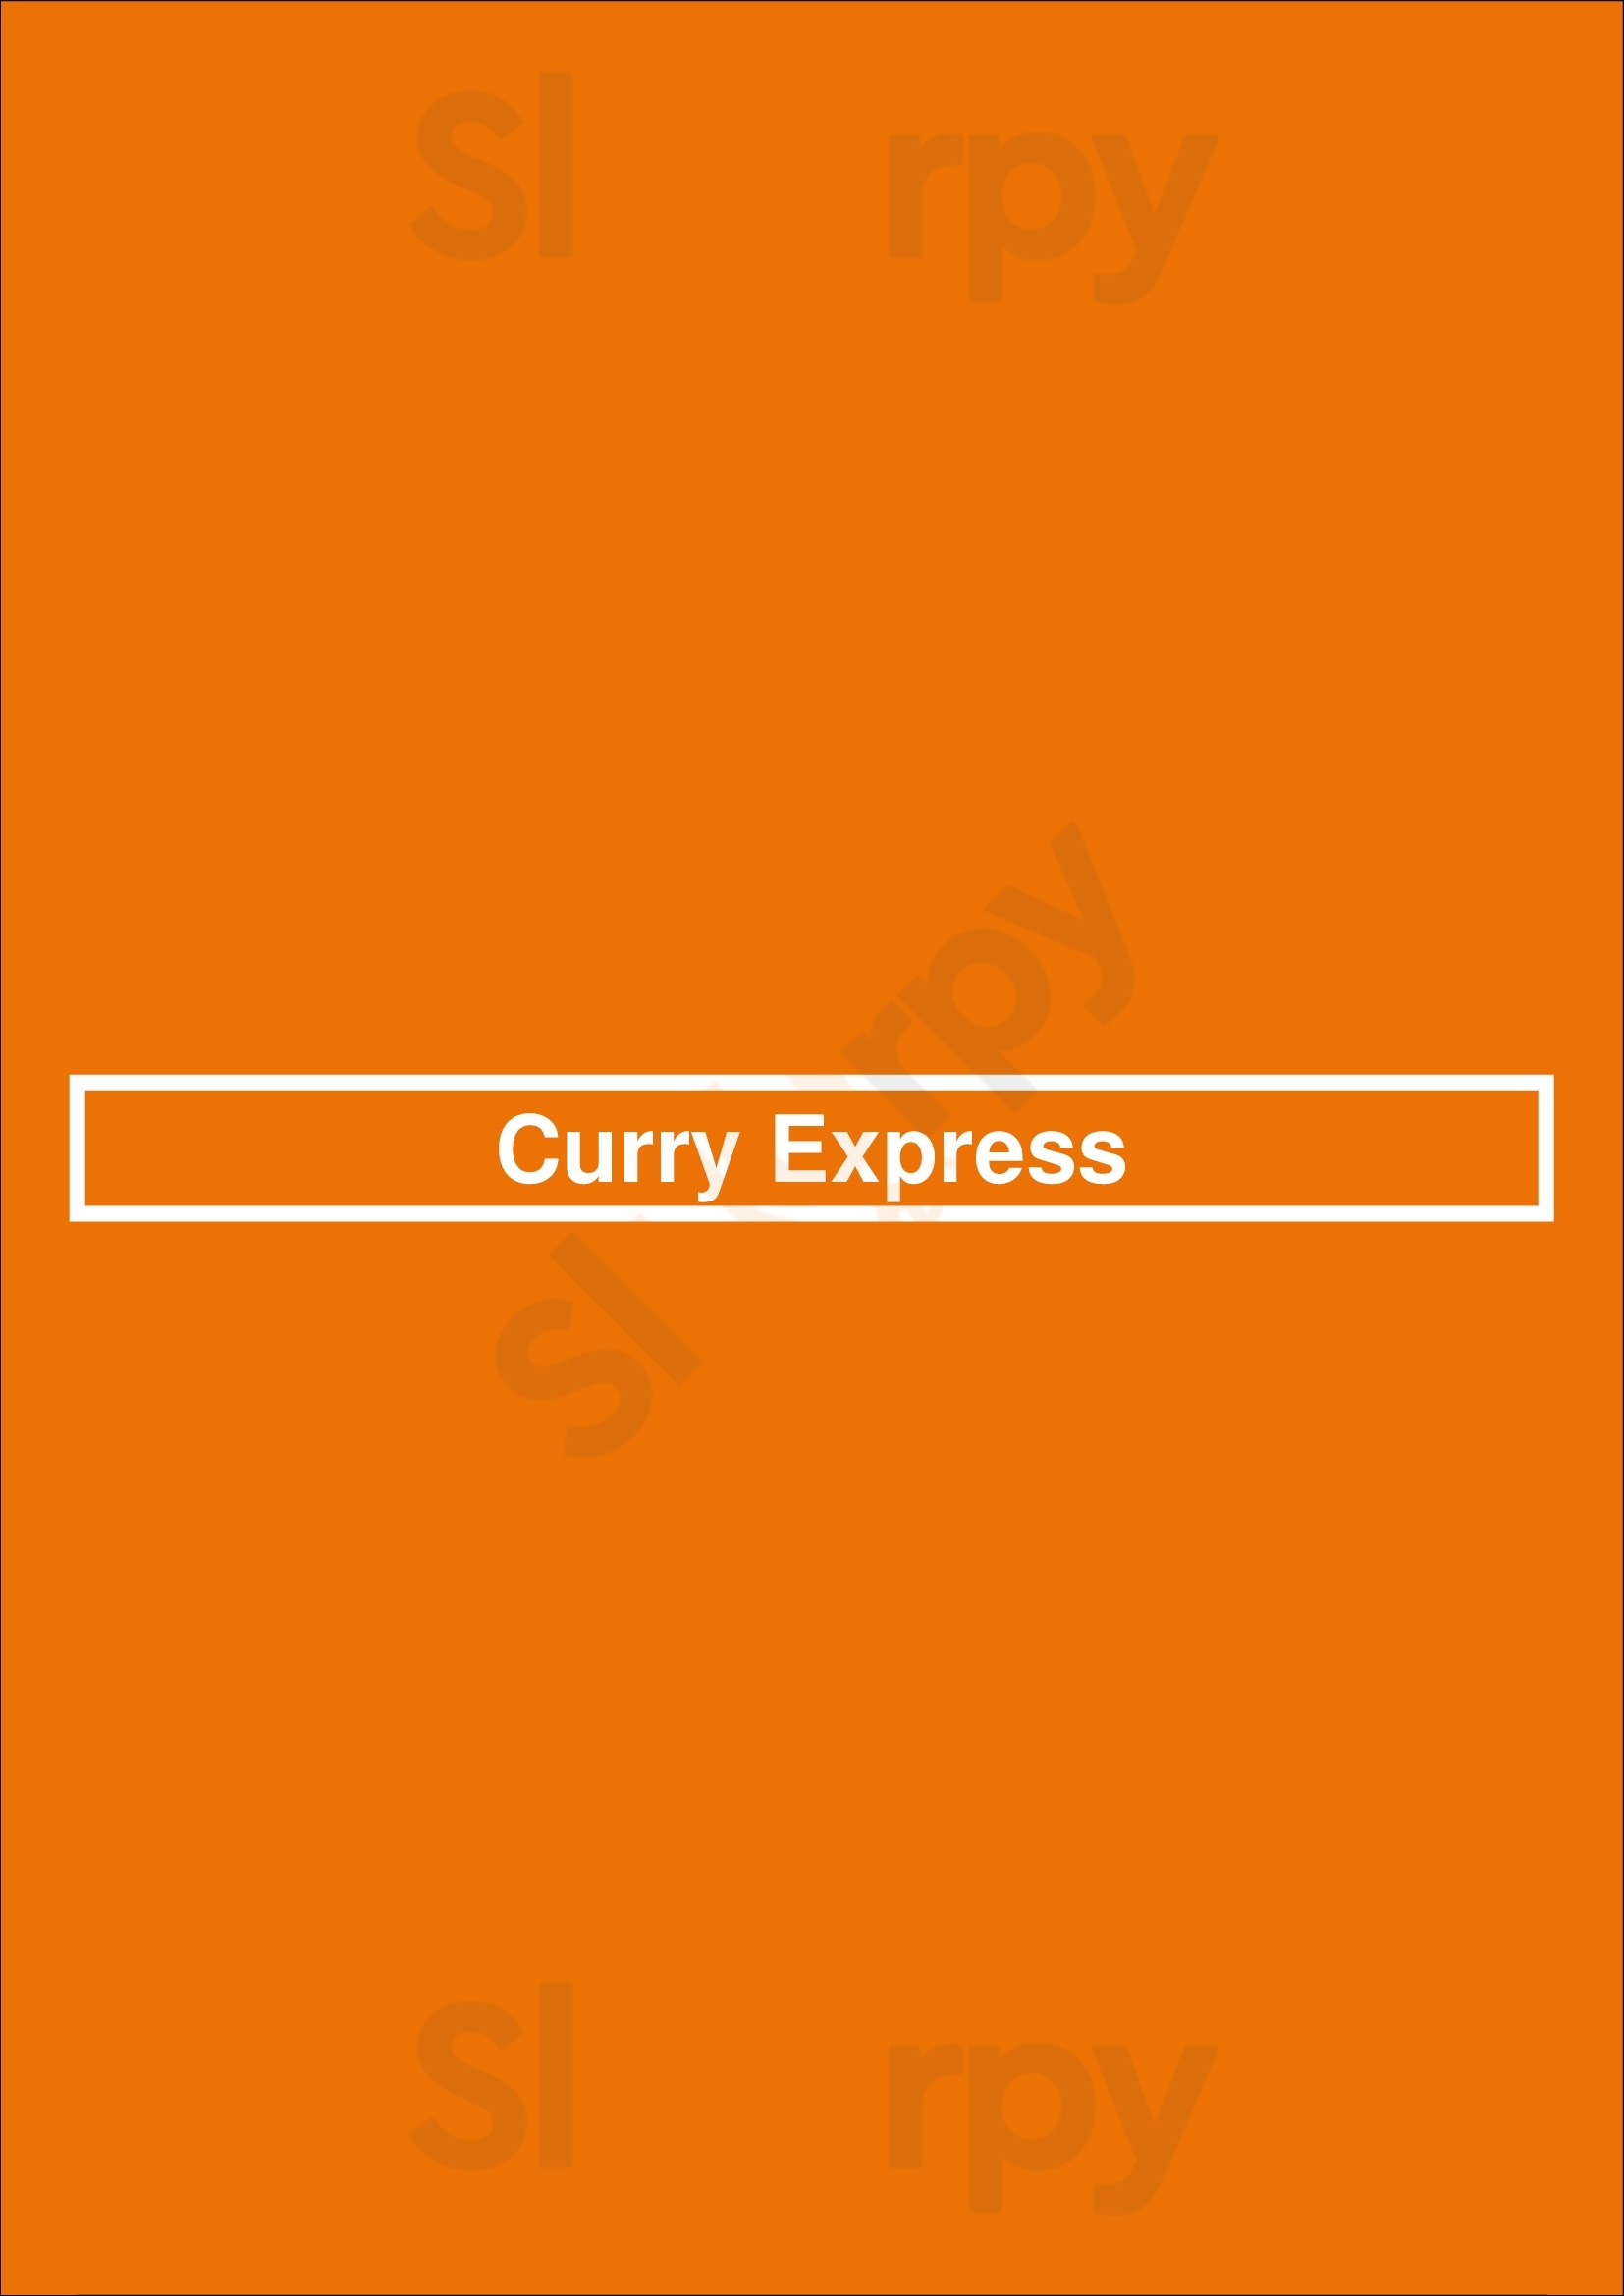 Curry Express Boston Menu - 1